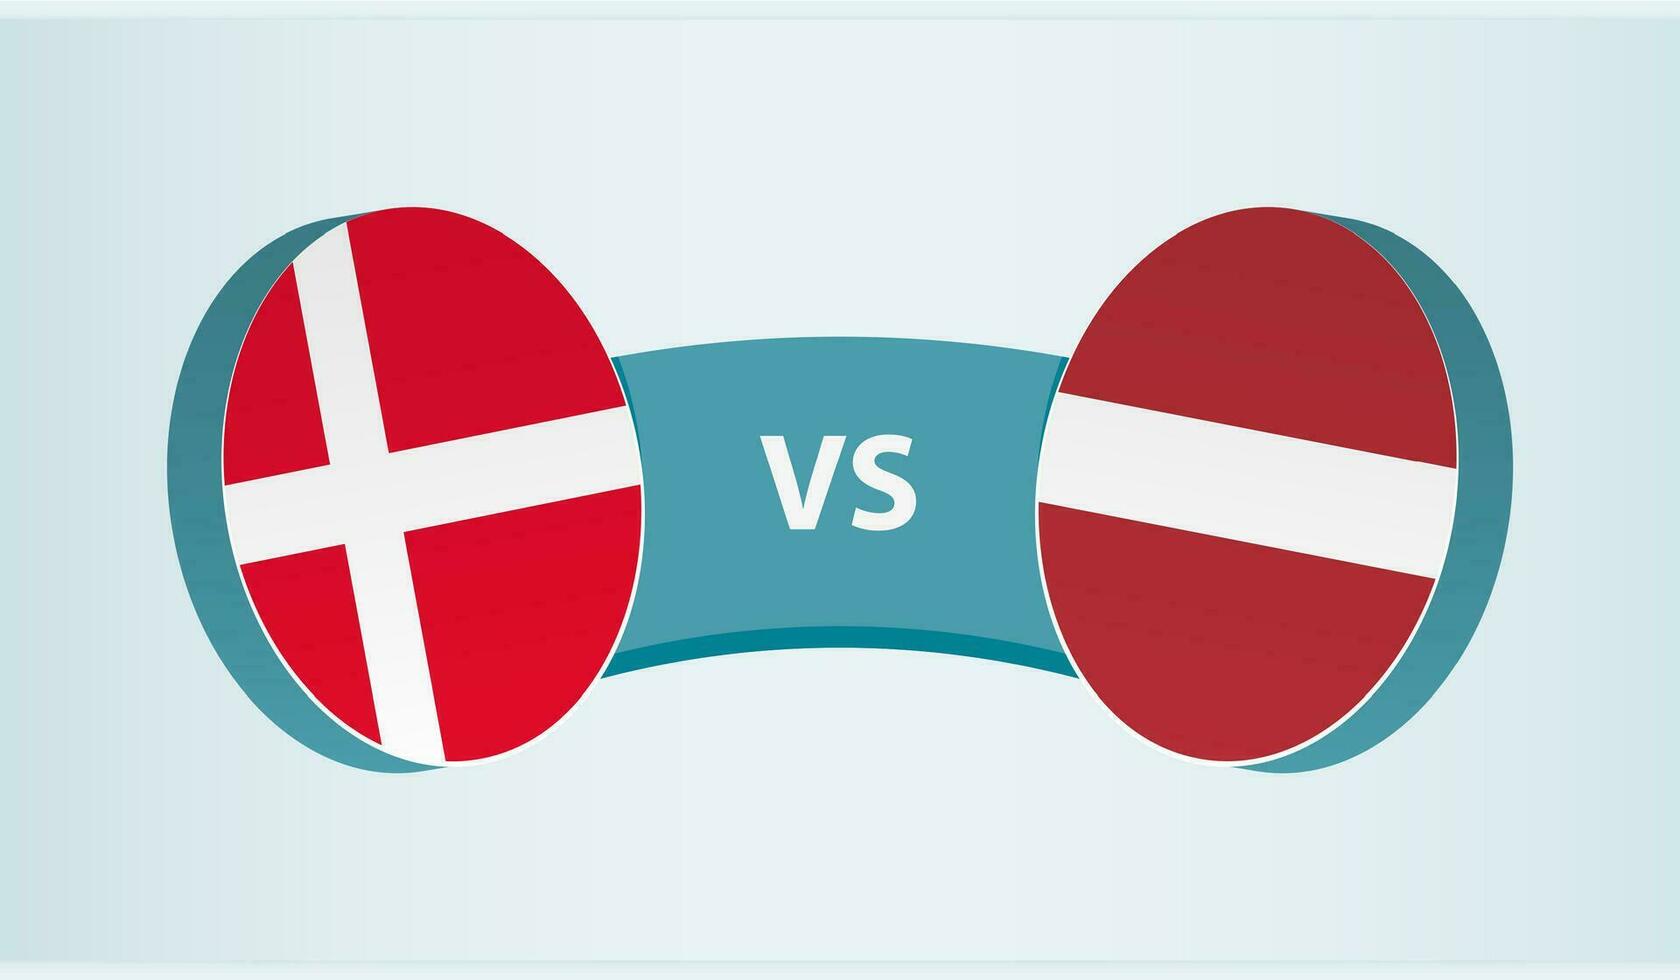 Denmark versus Latvia, team sports competition concept. vector